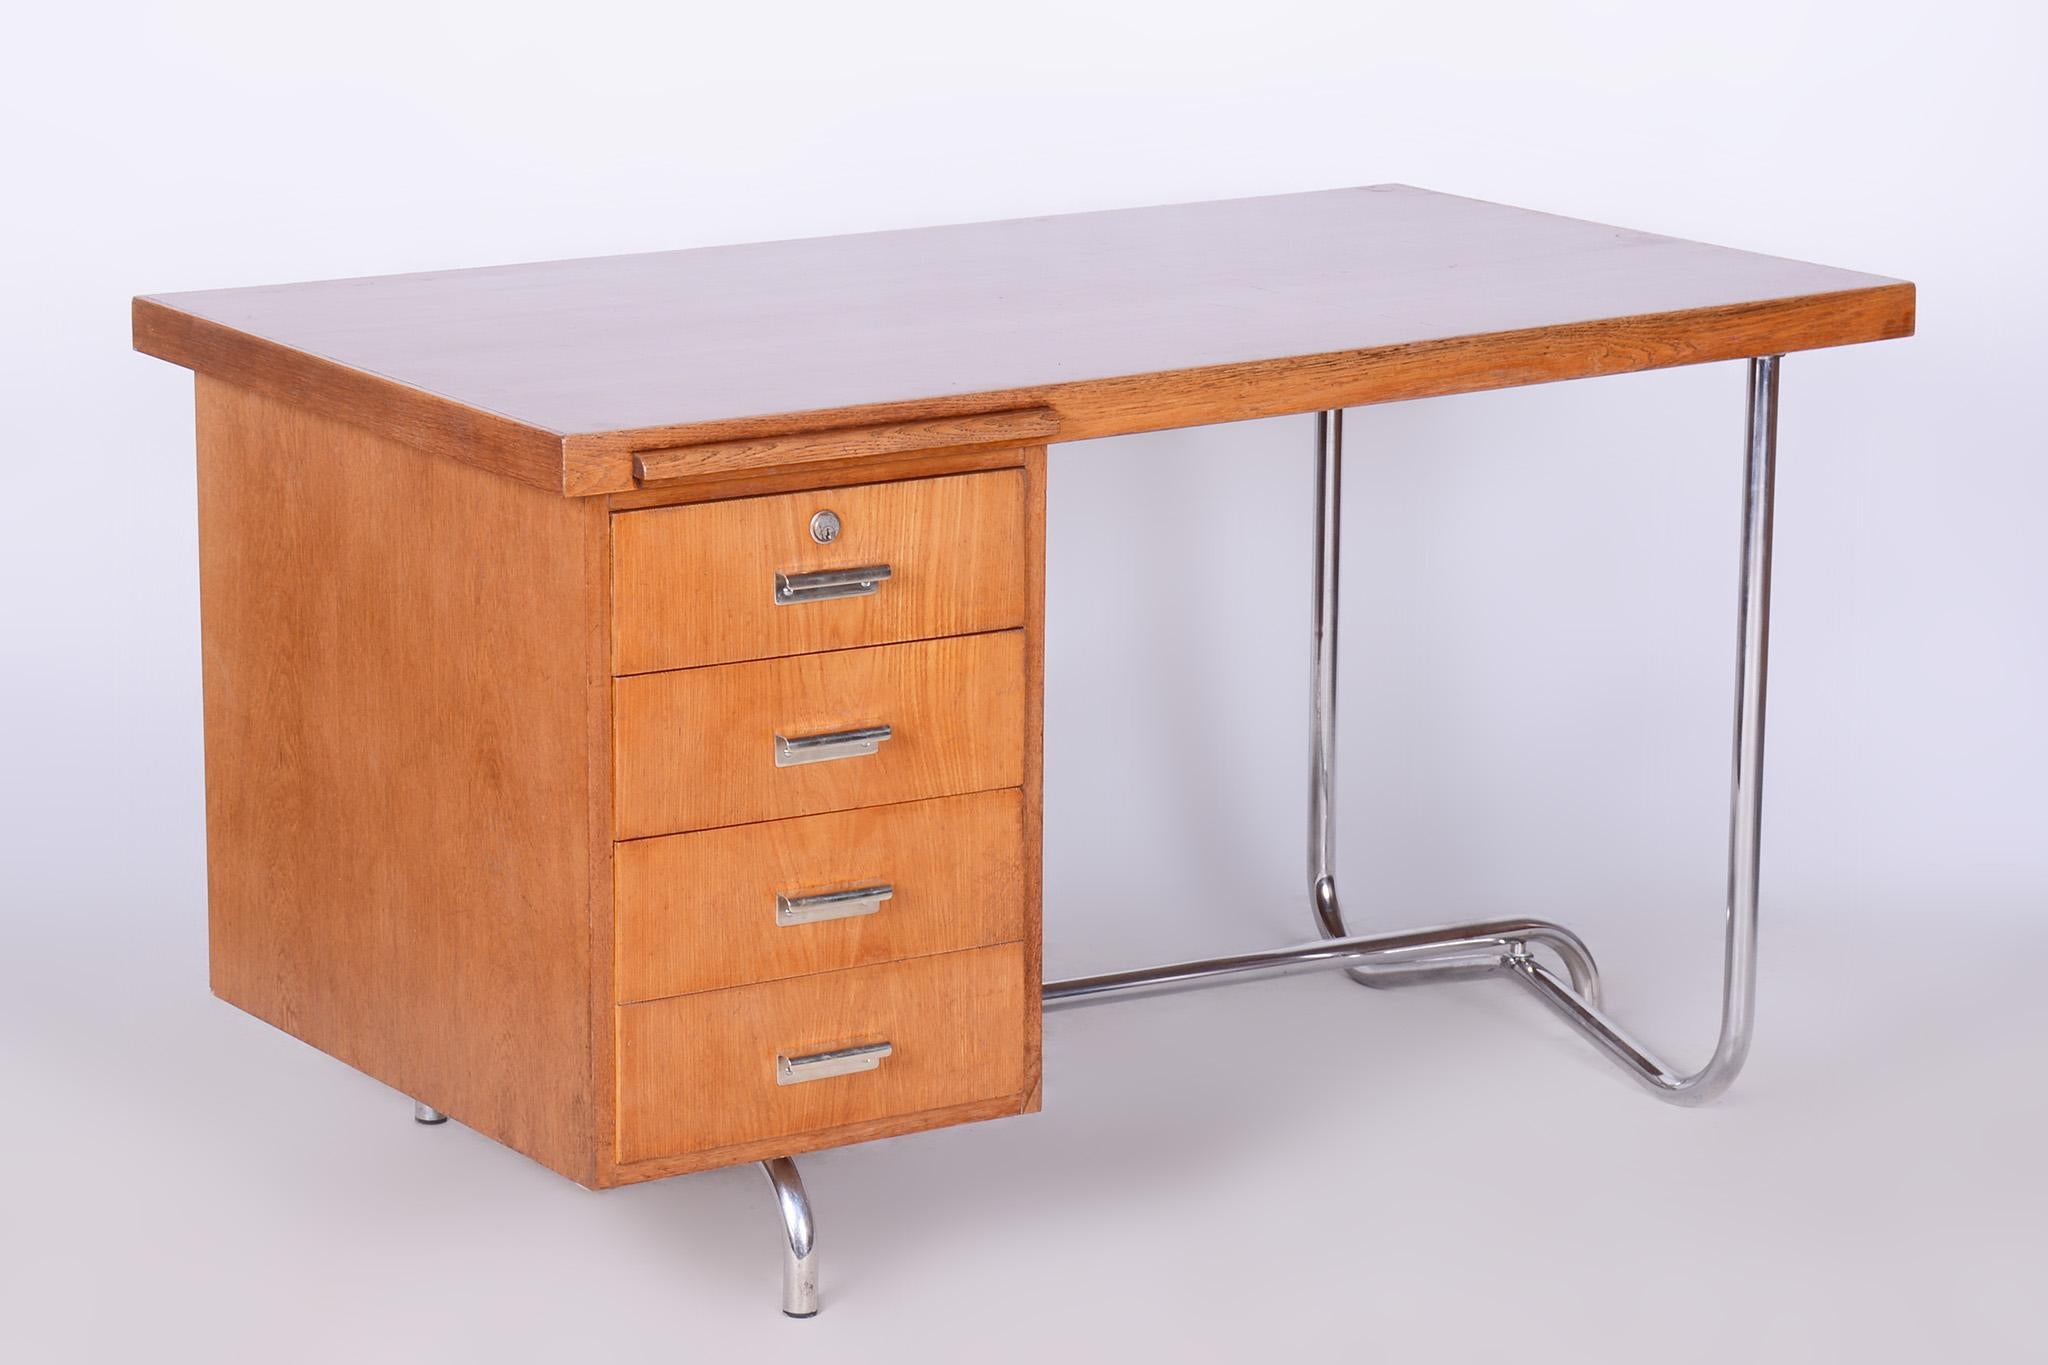 Restored Pair of Oak Writing Desks, Hynek Gottwald, Chrome, Czechia, 1930s For Sale 2